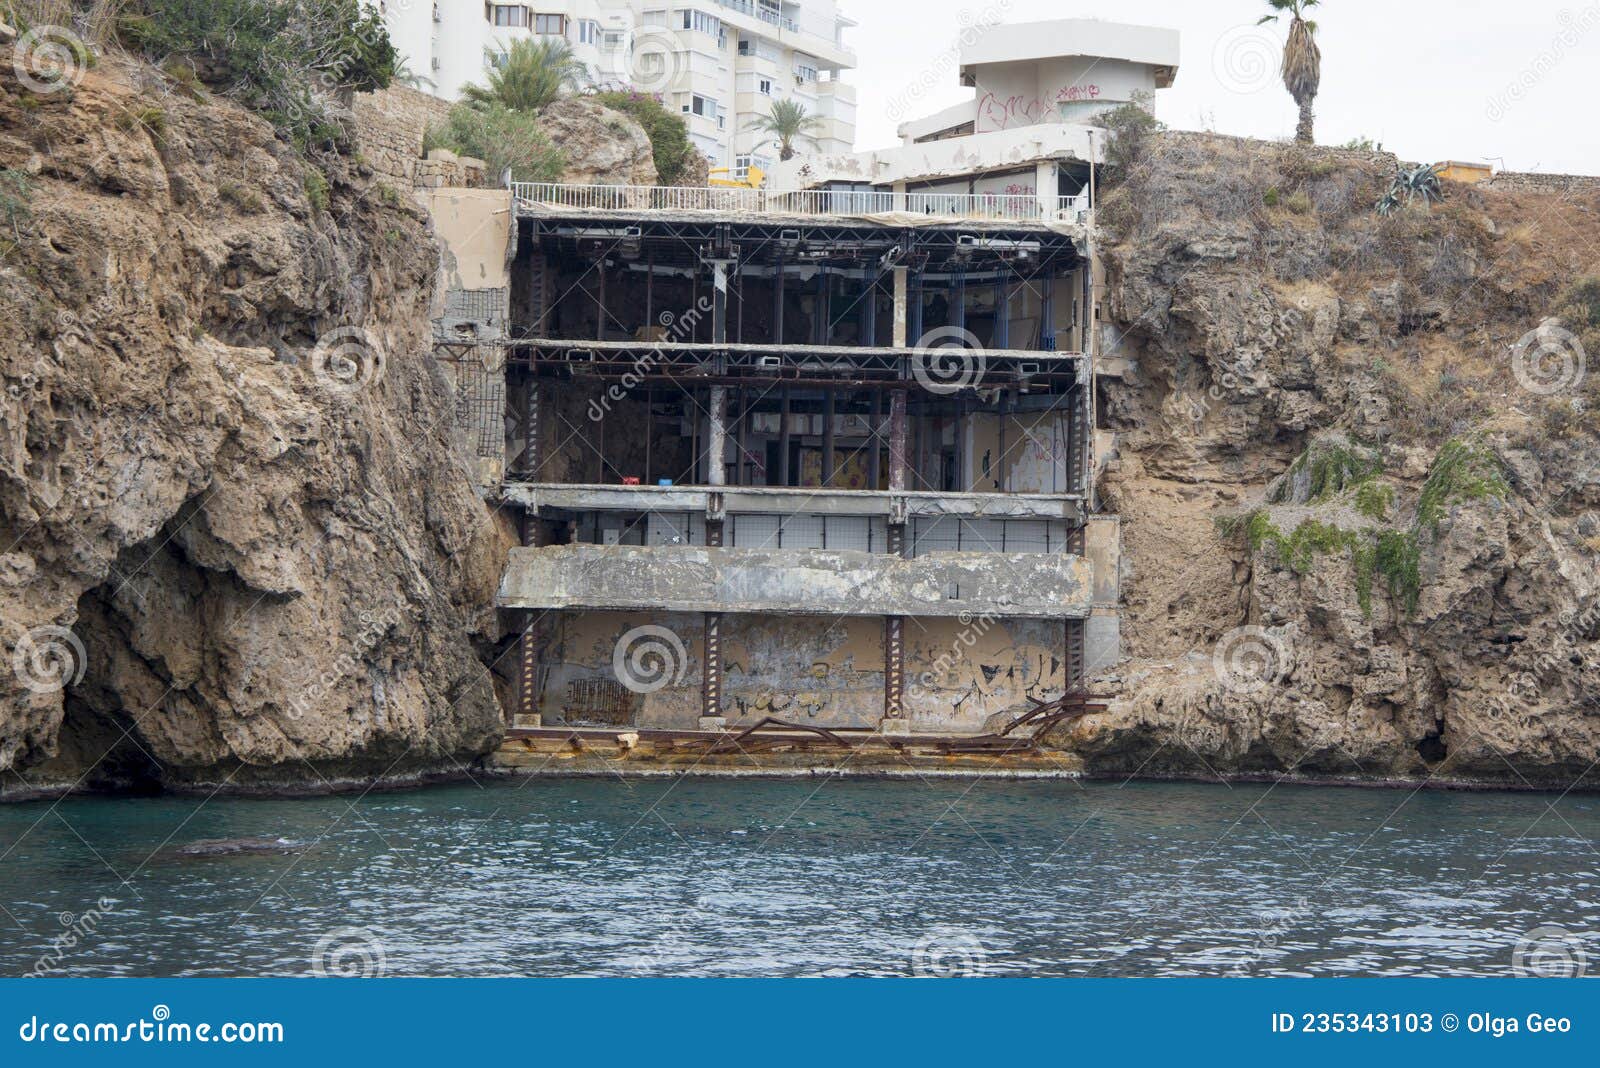 antaliya, turkey - october 30 2021: abandoned building in the rock